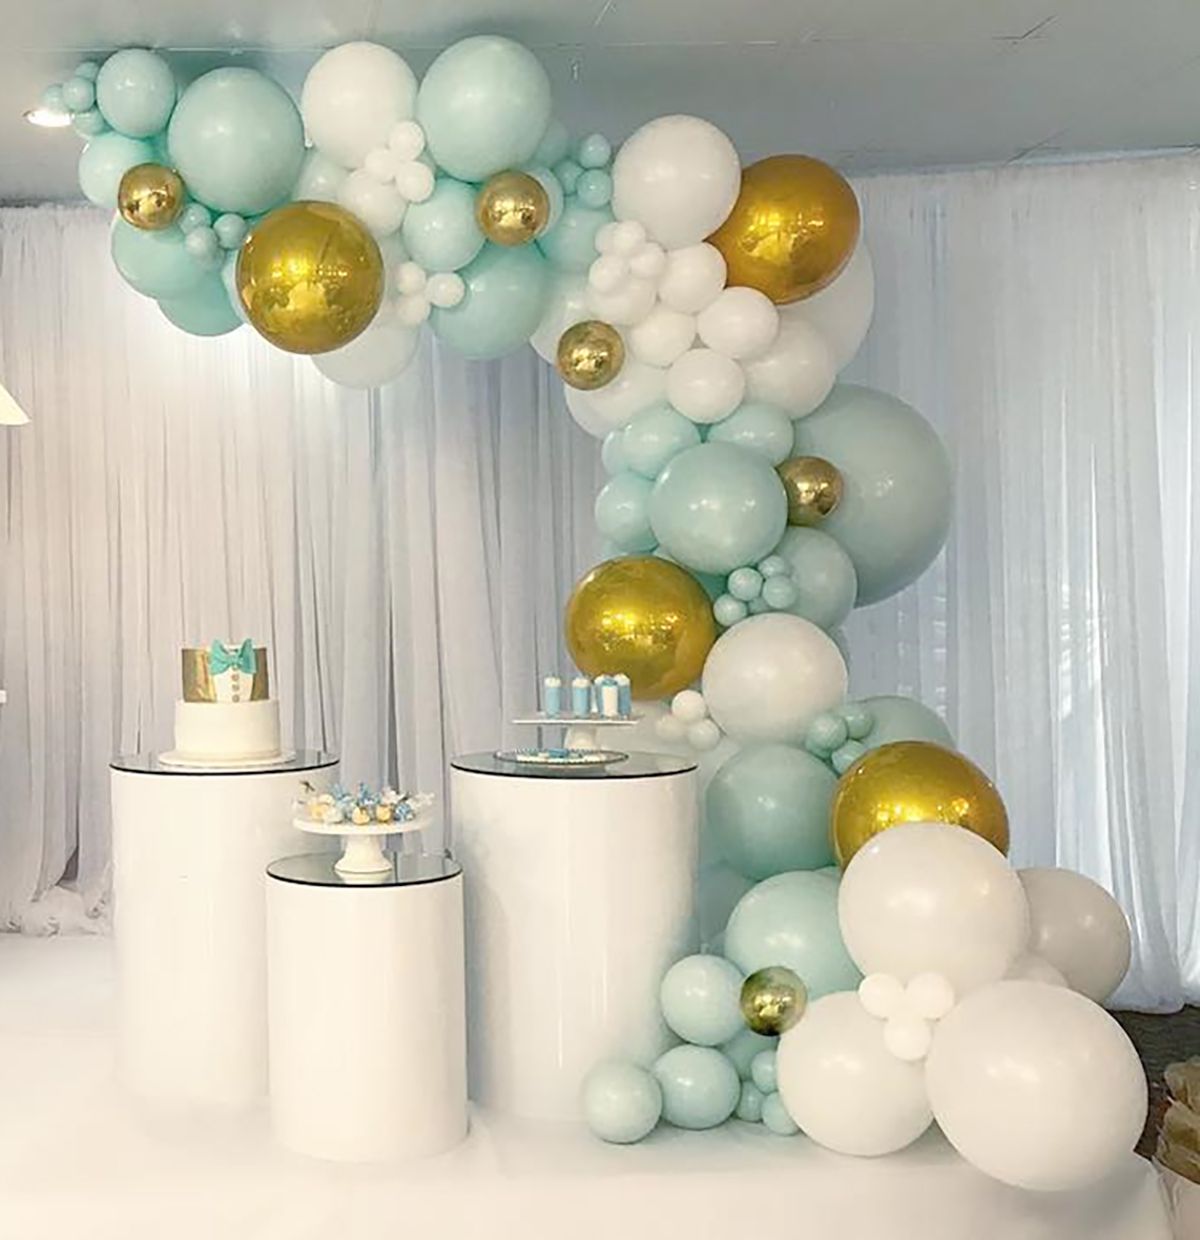 Balloon-Garland-Gold-Party-Decorations-Birthday-Wedding-Decorations-1610430